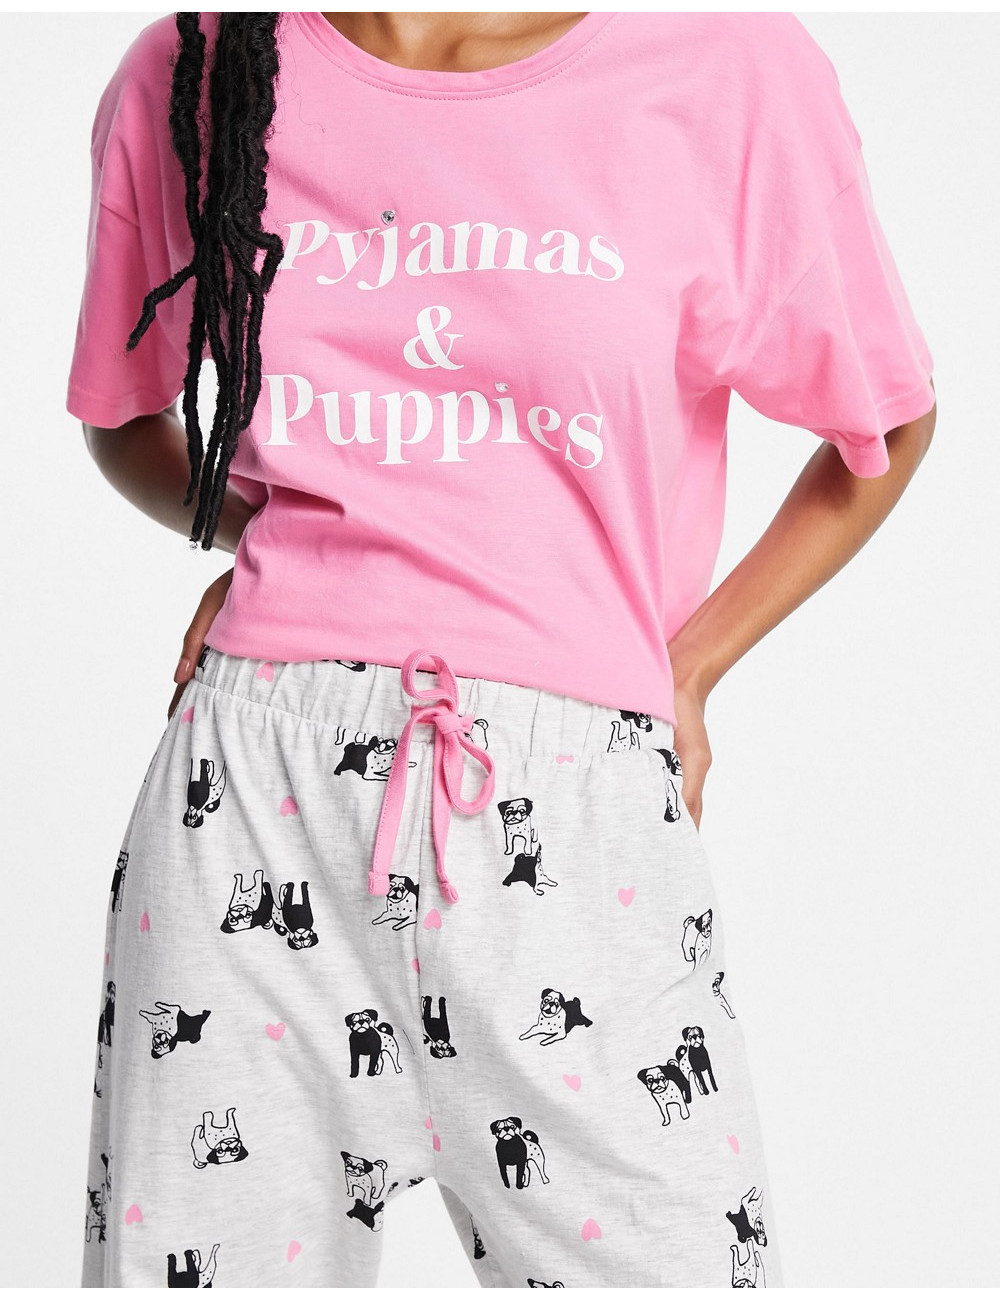 New Look pyjamas & puppies...